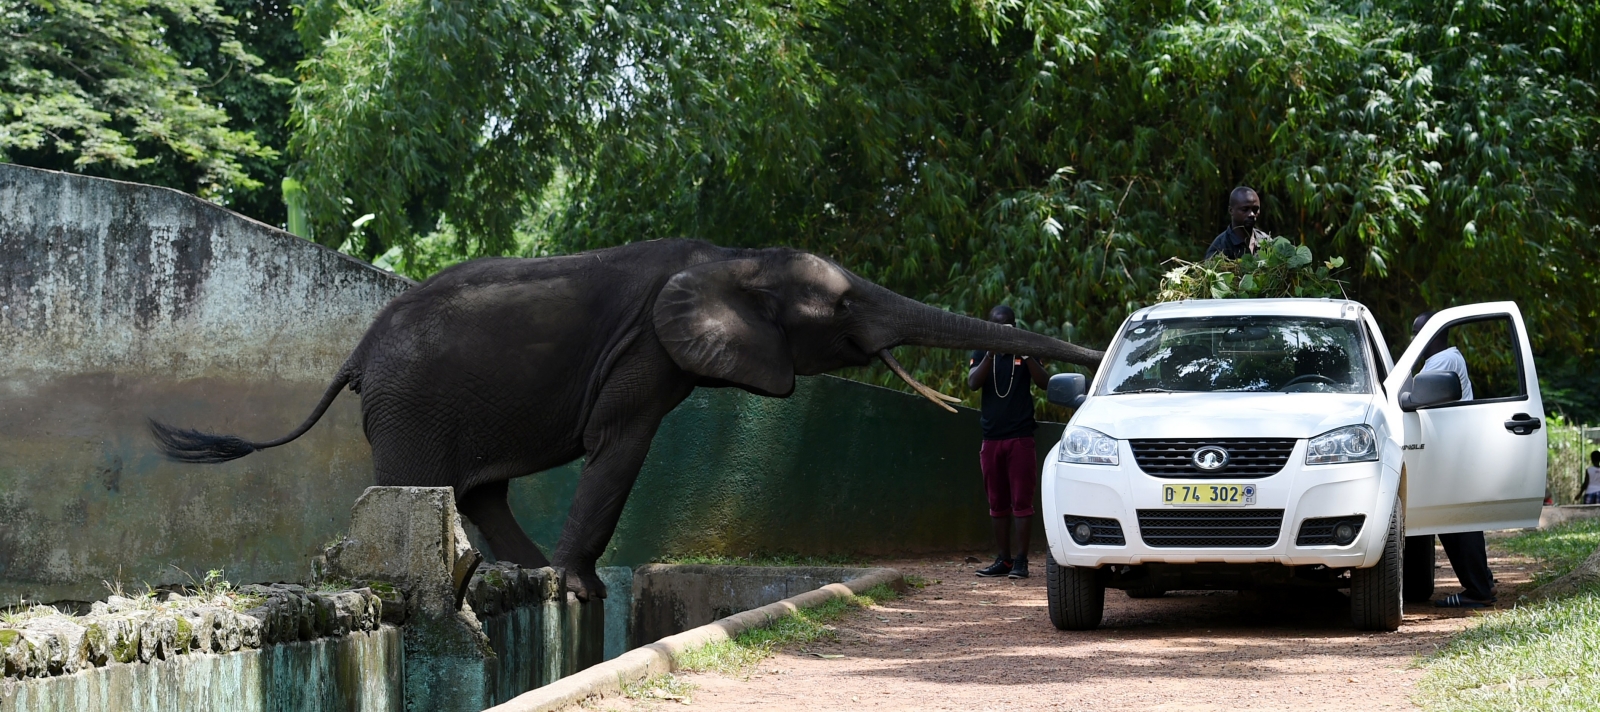 Elephants reaches for food in Abidjan 